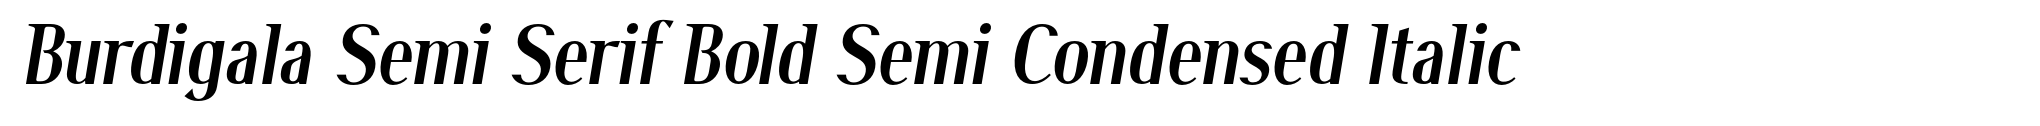 Burdigala Semi Serif Bold Semi Condensed Italic image